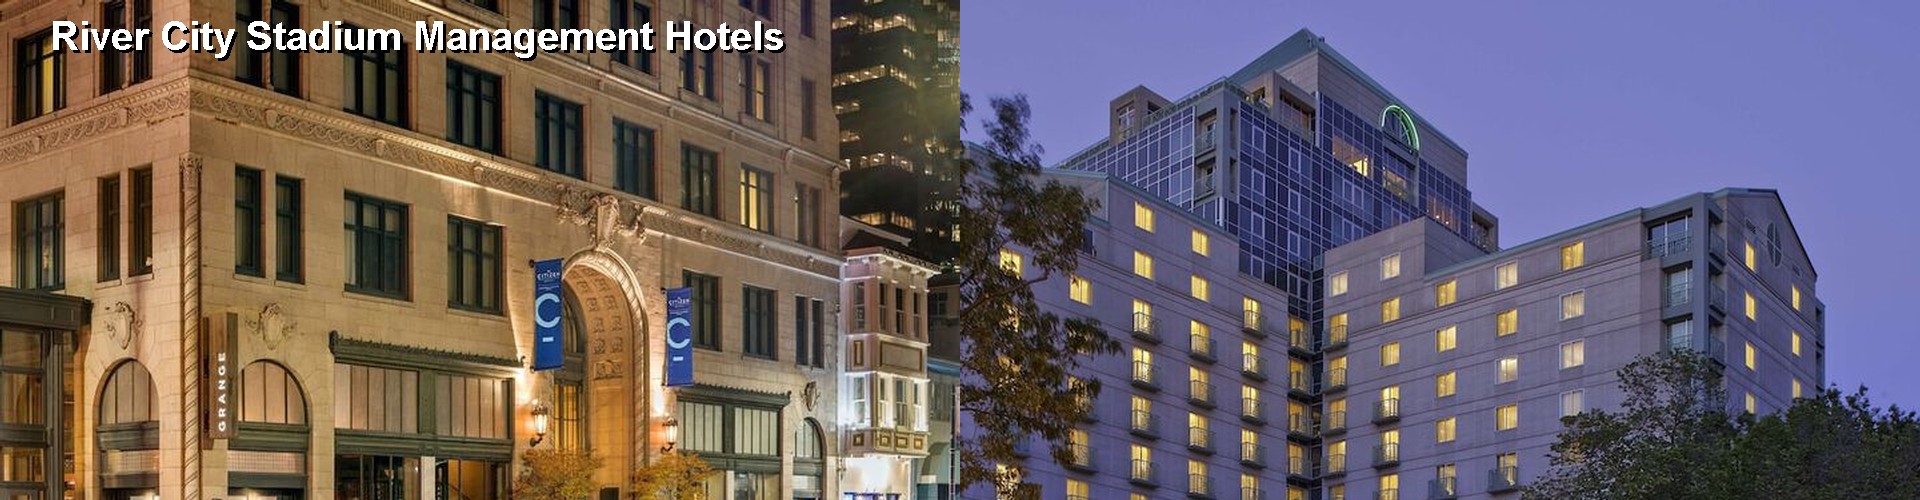 3 Best Hotels near River City Stadium Management